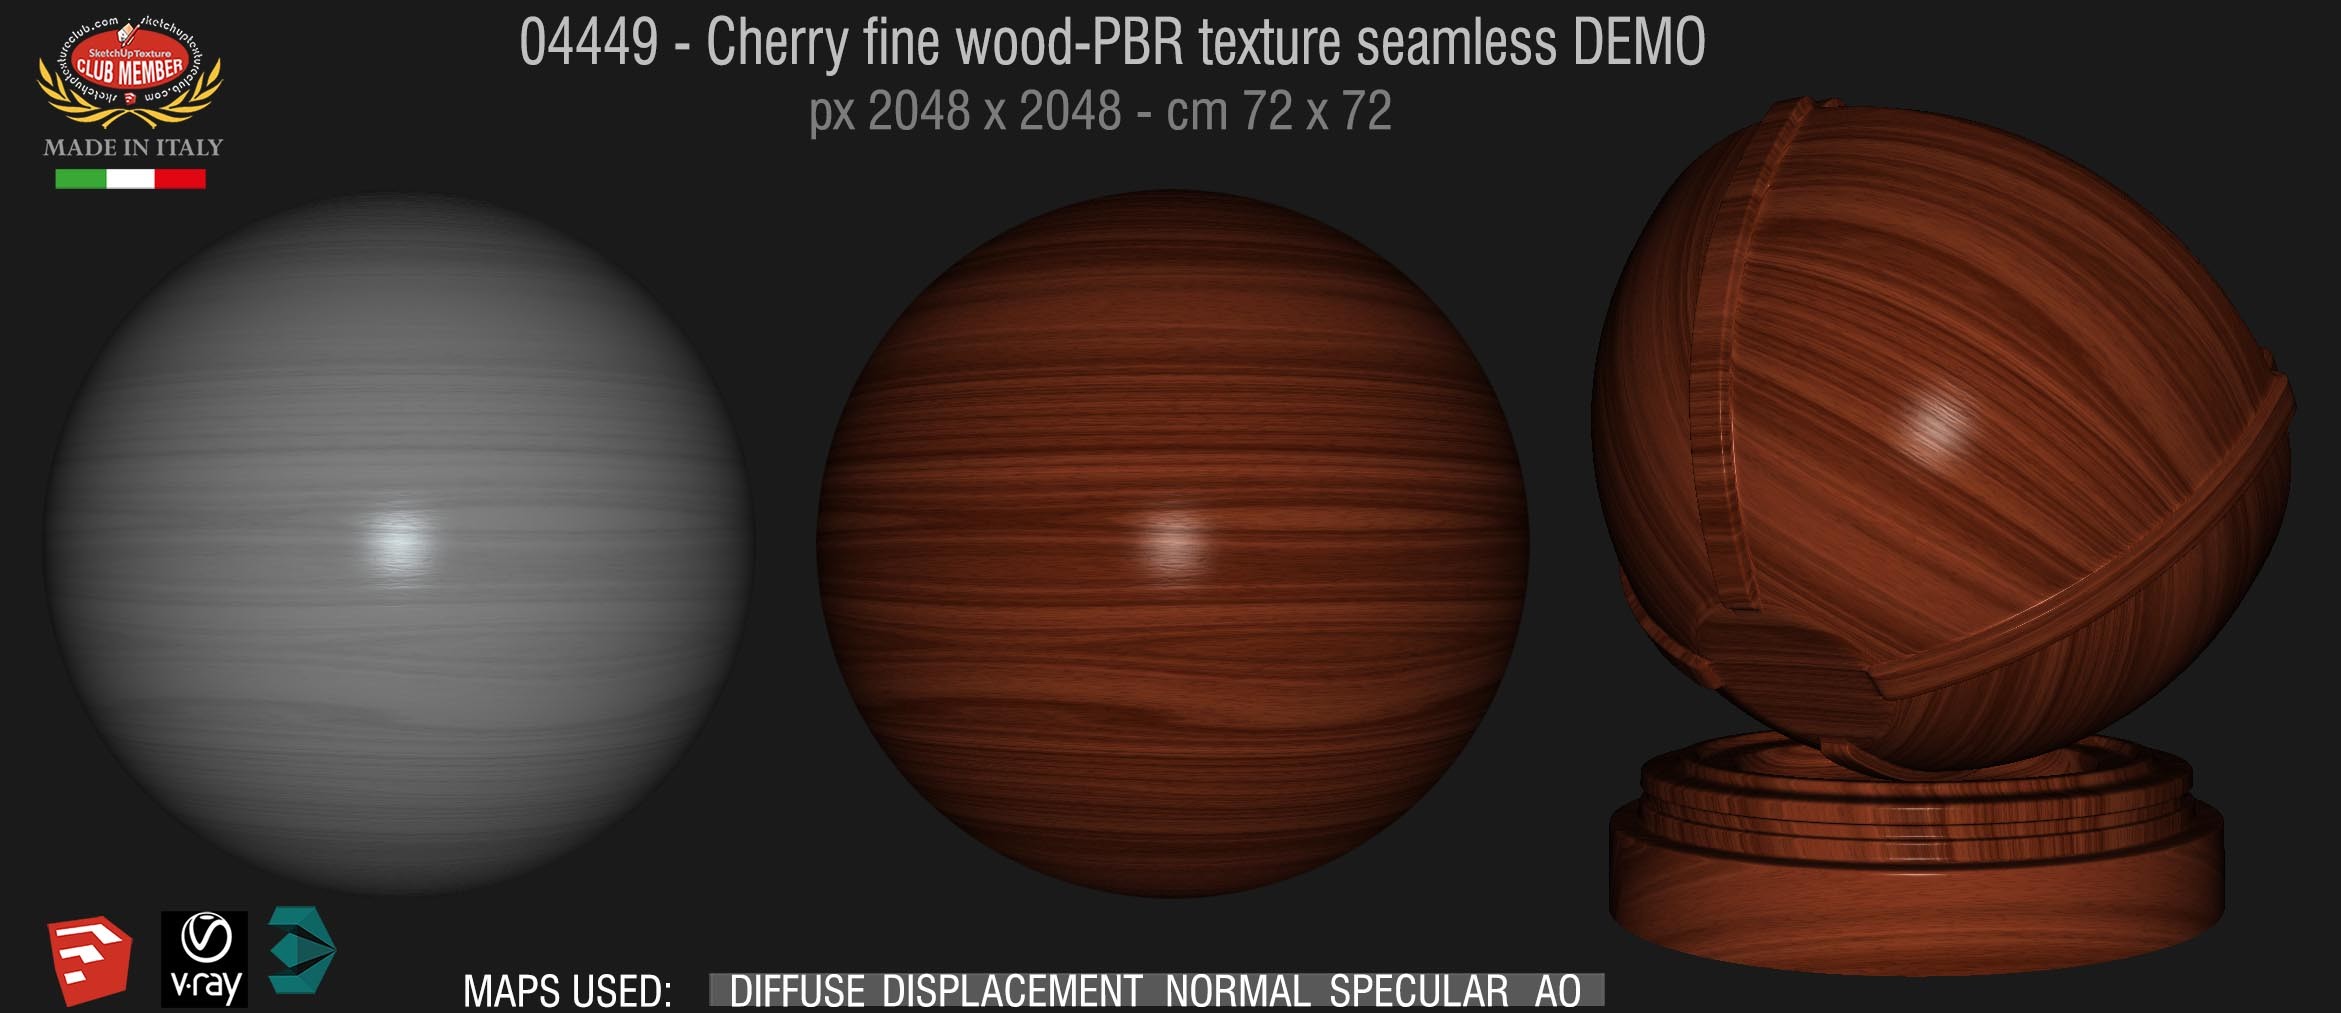 04449 Cherry fine wood-PBR texture seamless DEMO